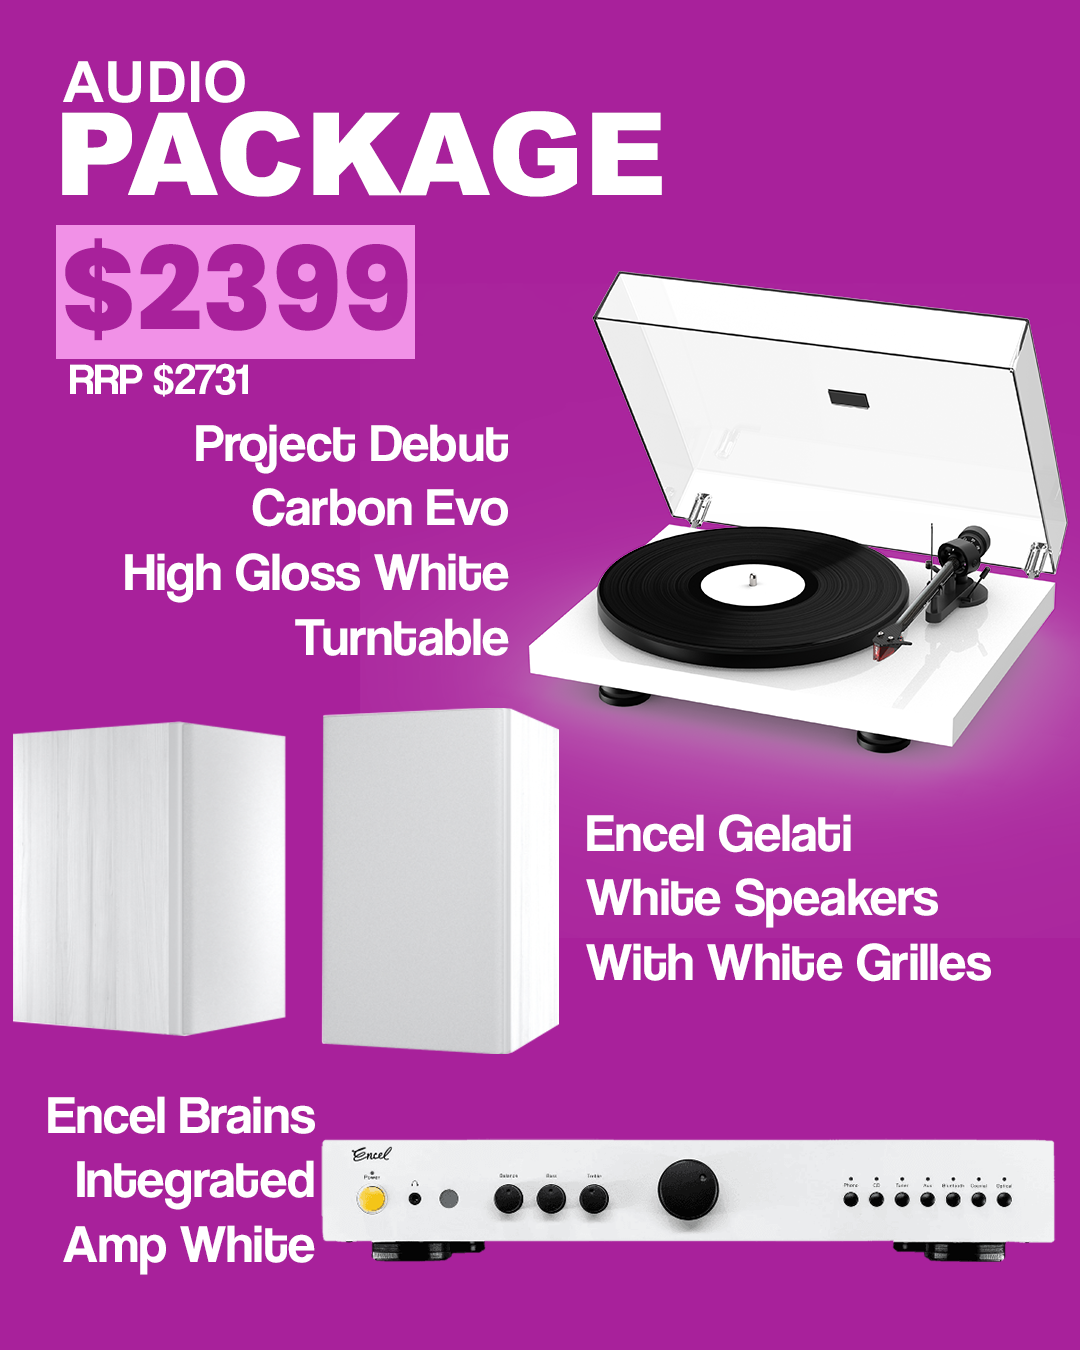 Encel Gelati Speakers Vanilla White / Encel Brains White / Encel Grilles White / Project Debut Carbon Evo Gloss White Package Deal